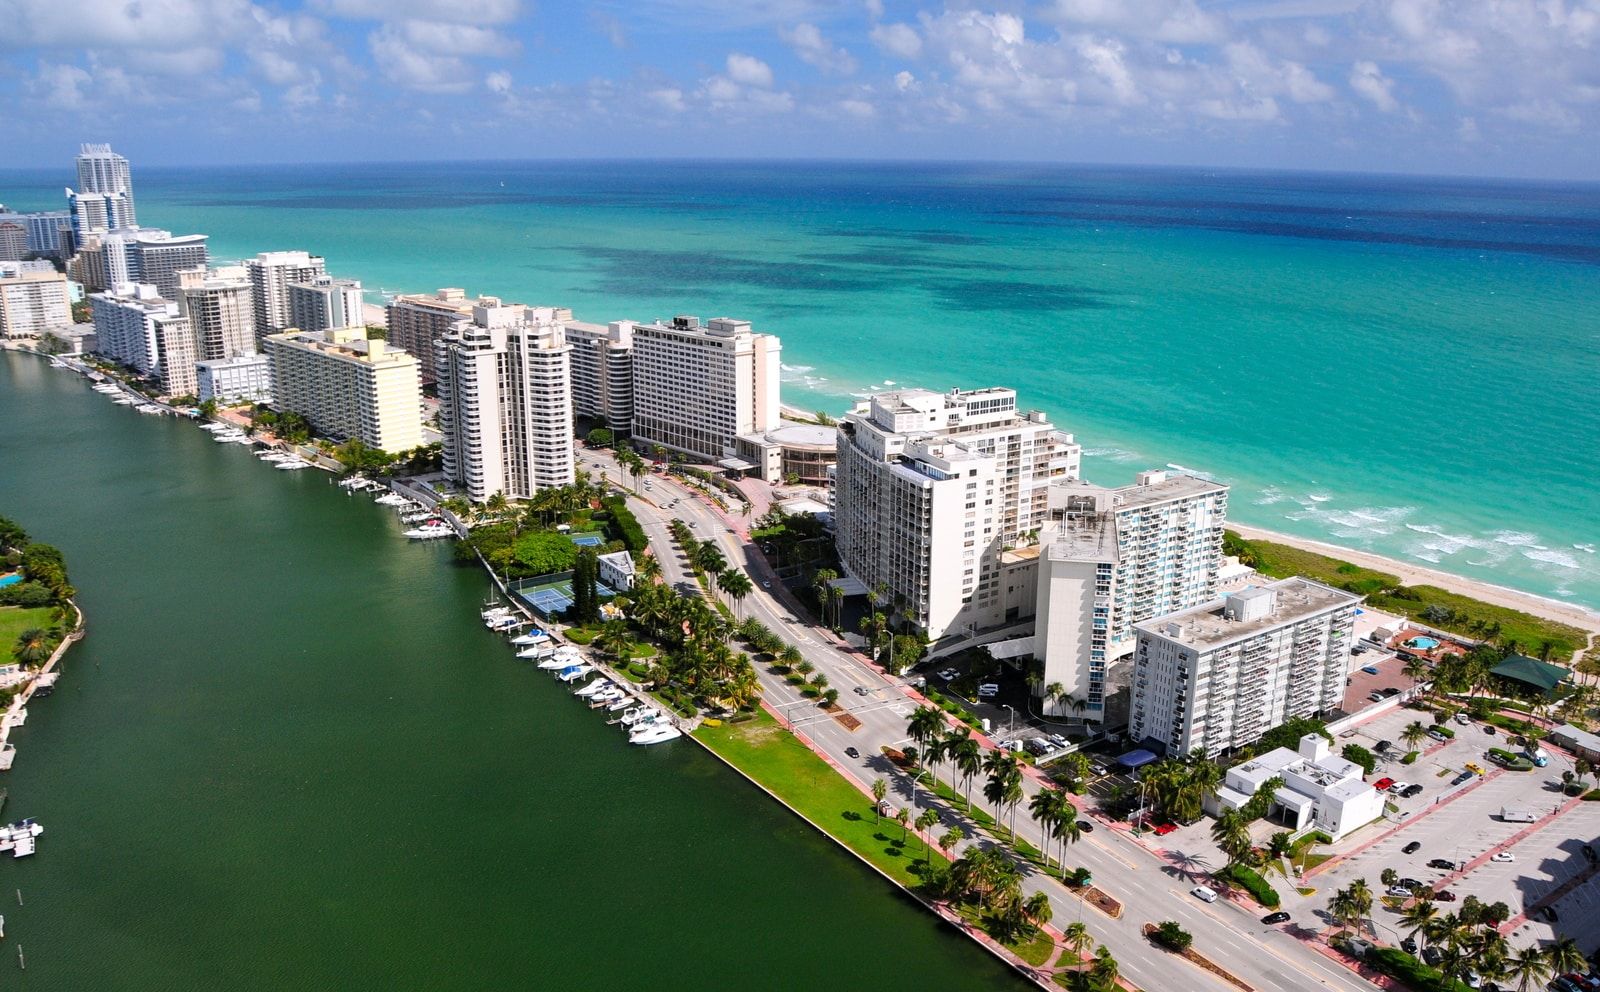 Miami Luxury Yacht Charter